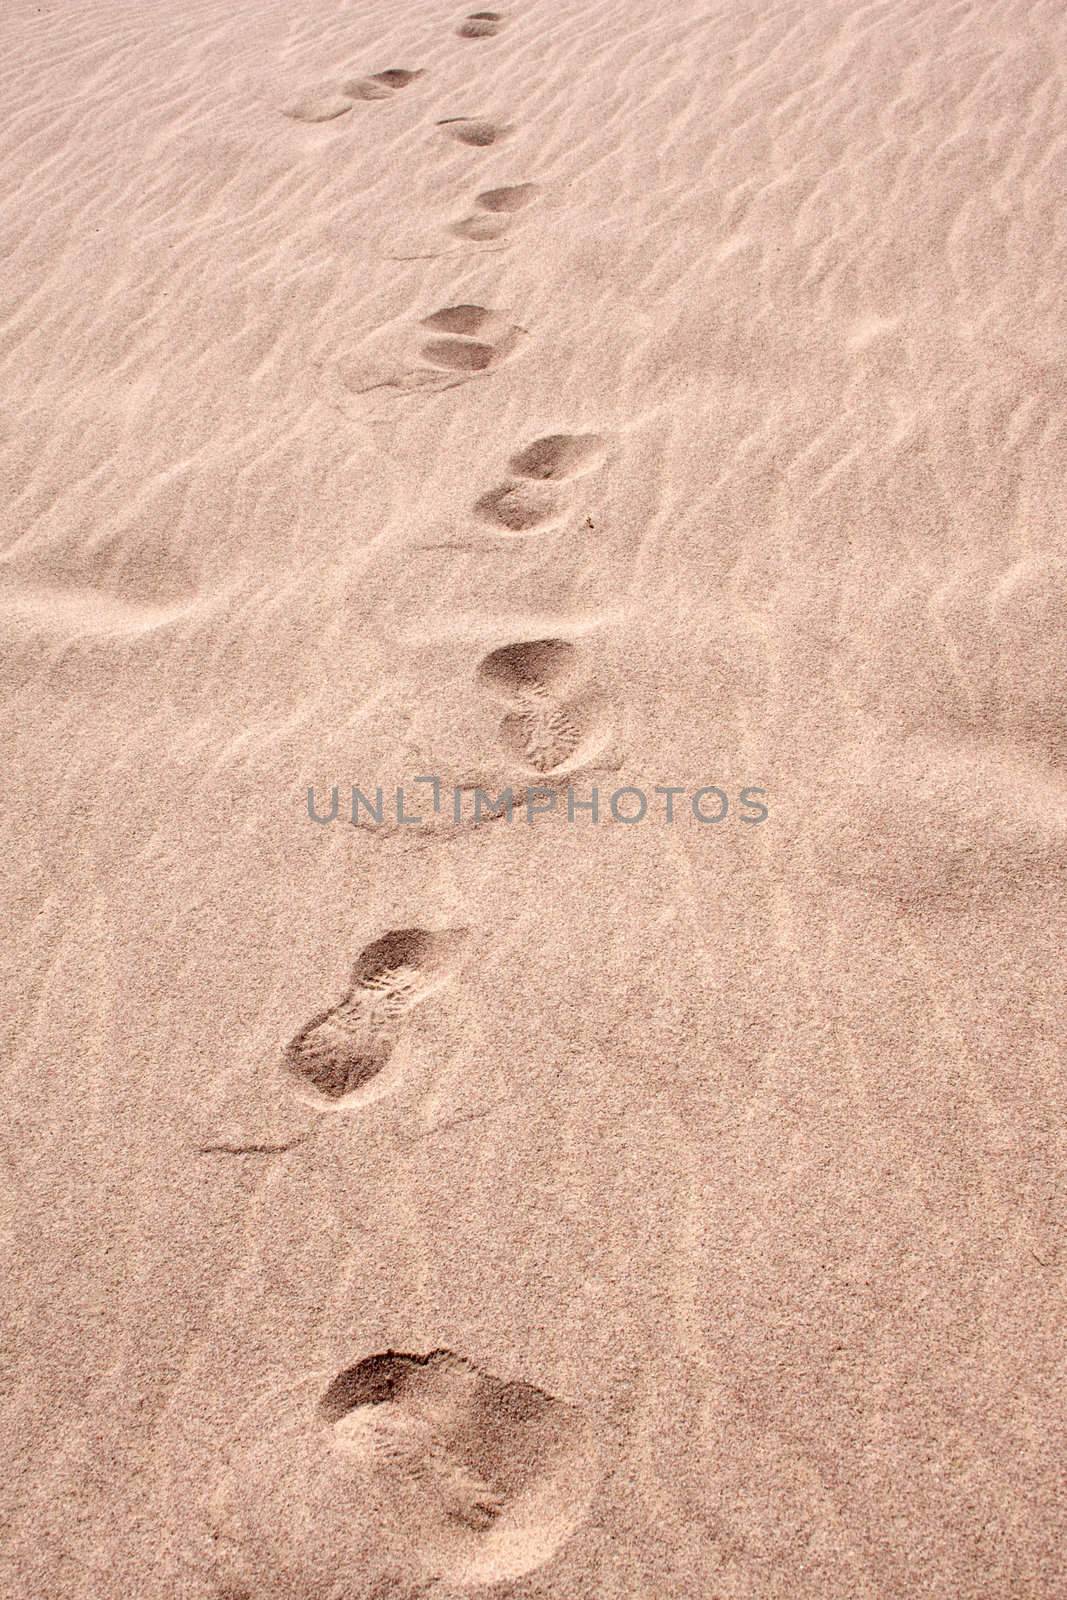 line of footprint on the sand in Sahara desert